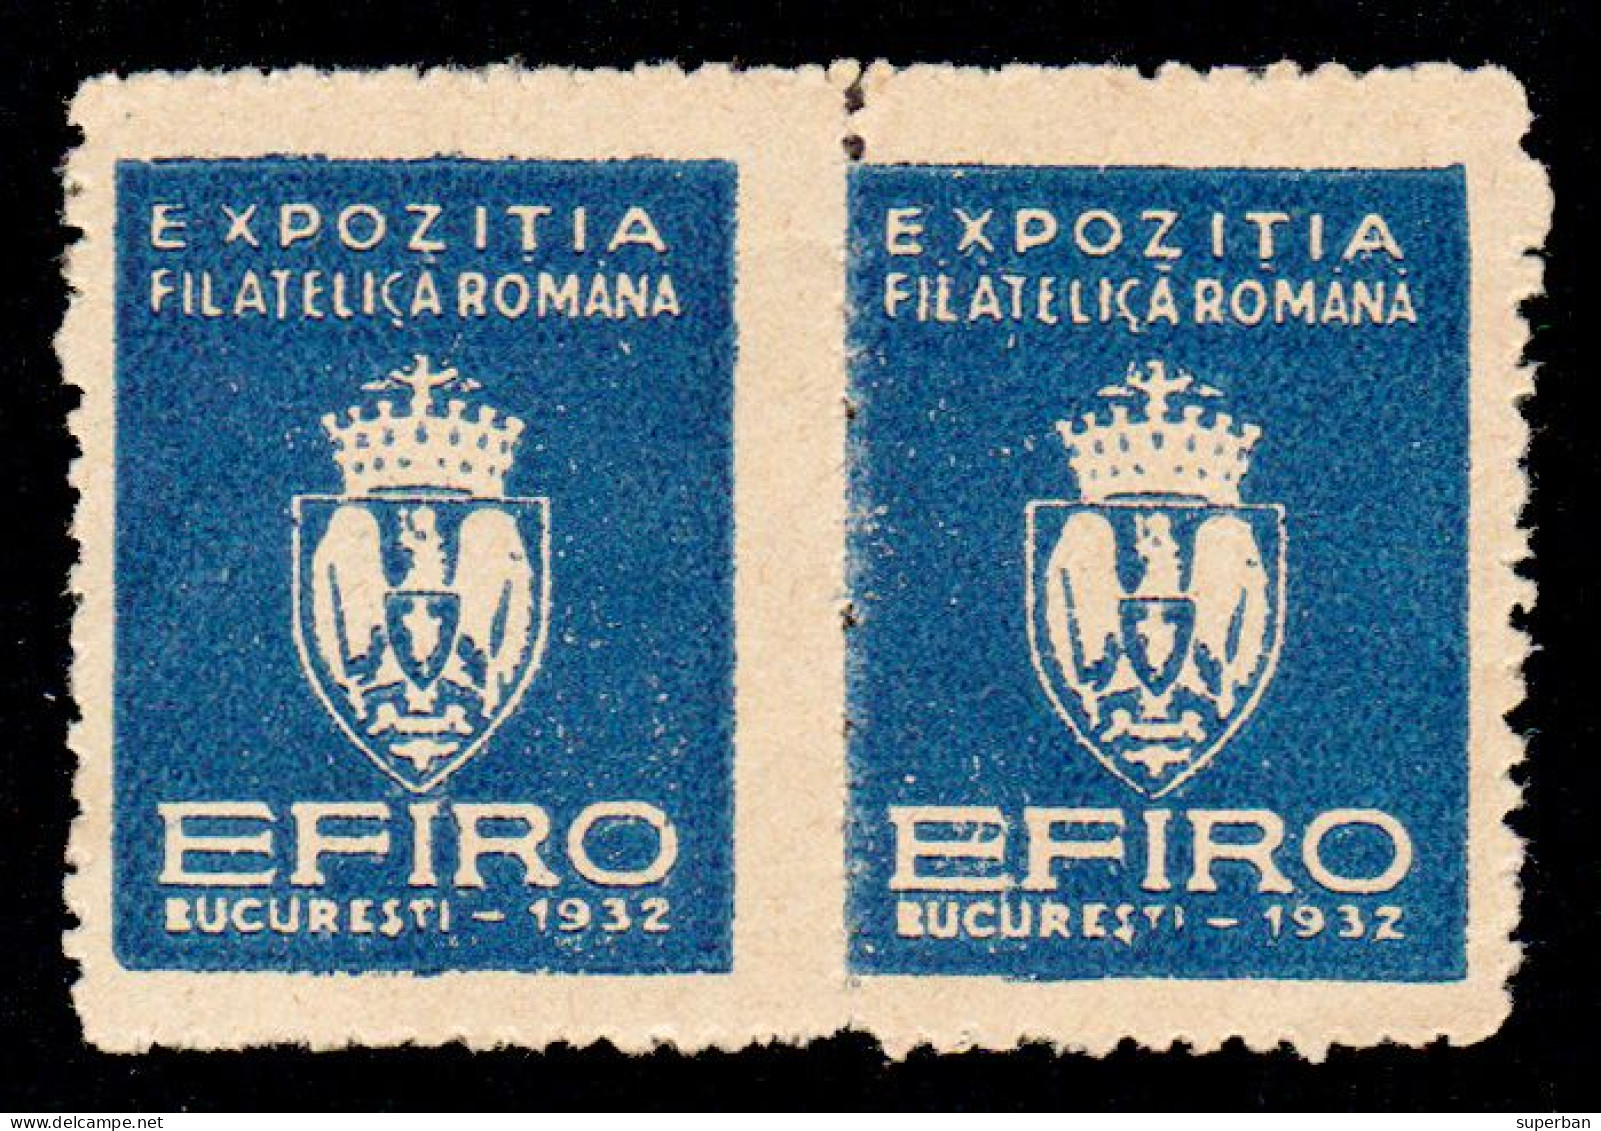 ROUMANIE / ROMANIA - VIGNETTE / CINDERELLA - 2 X EFIRO 1932 - EXPOZITIA FILATELICA ROMÂNA [ MNH ] - RRR ! (am819) - Fiscales